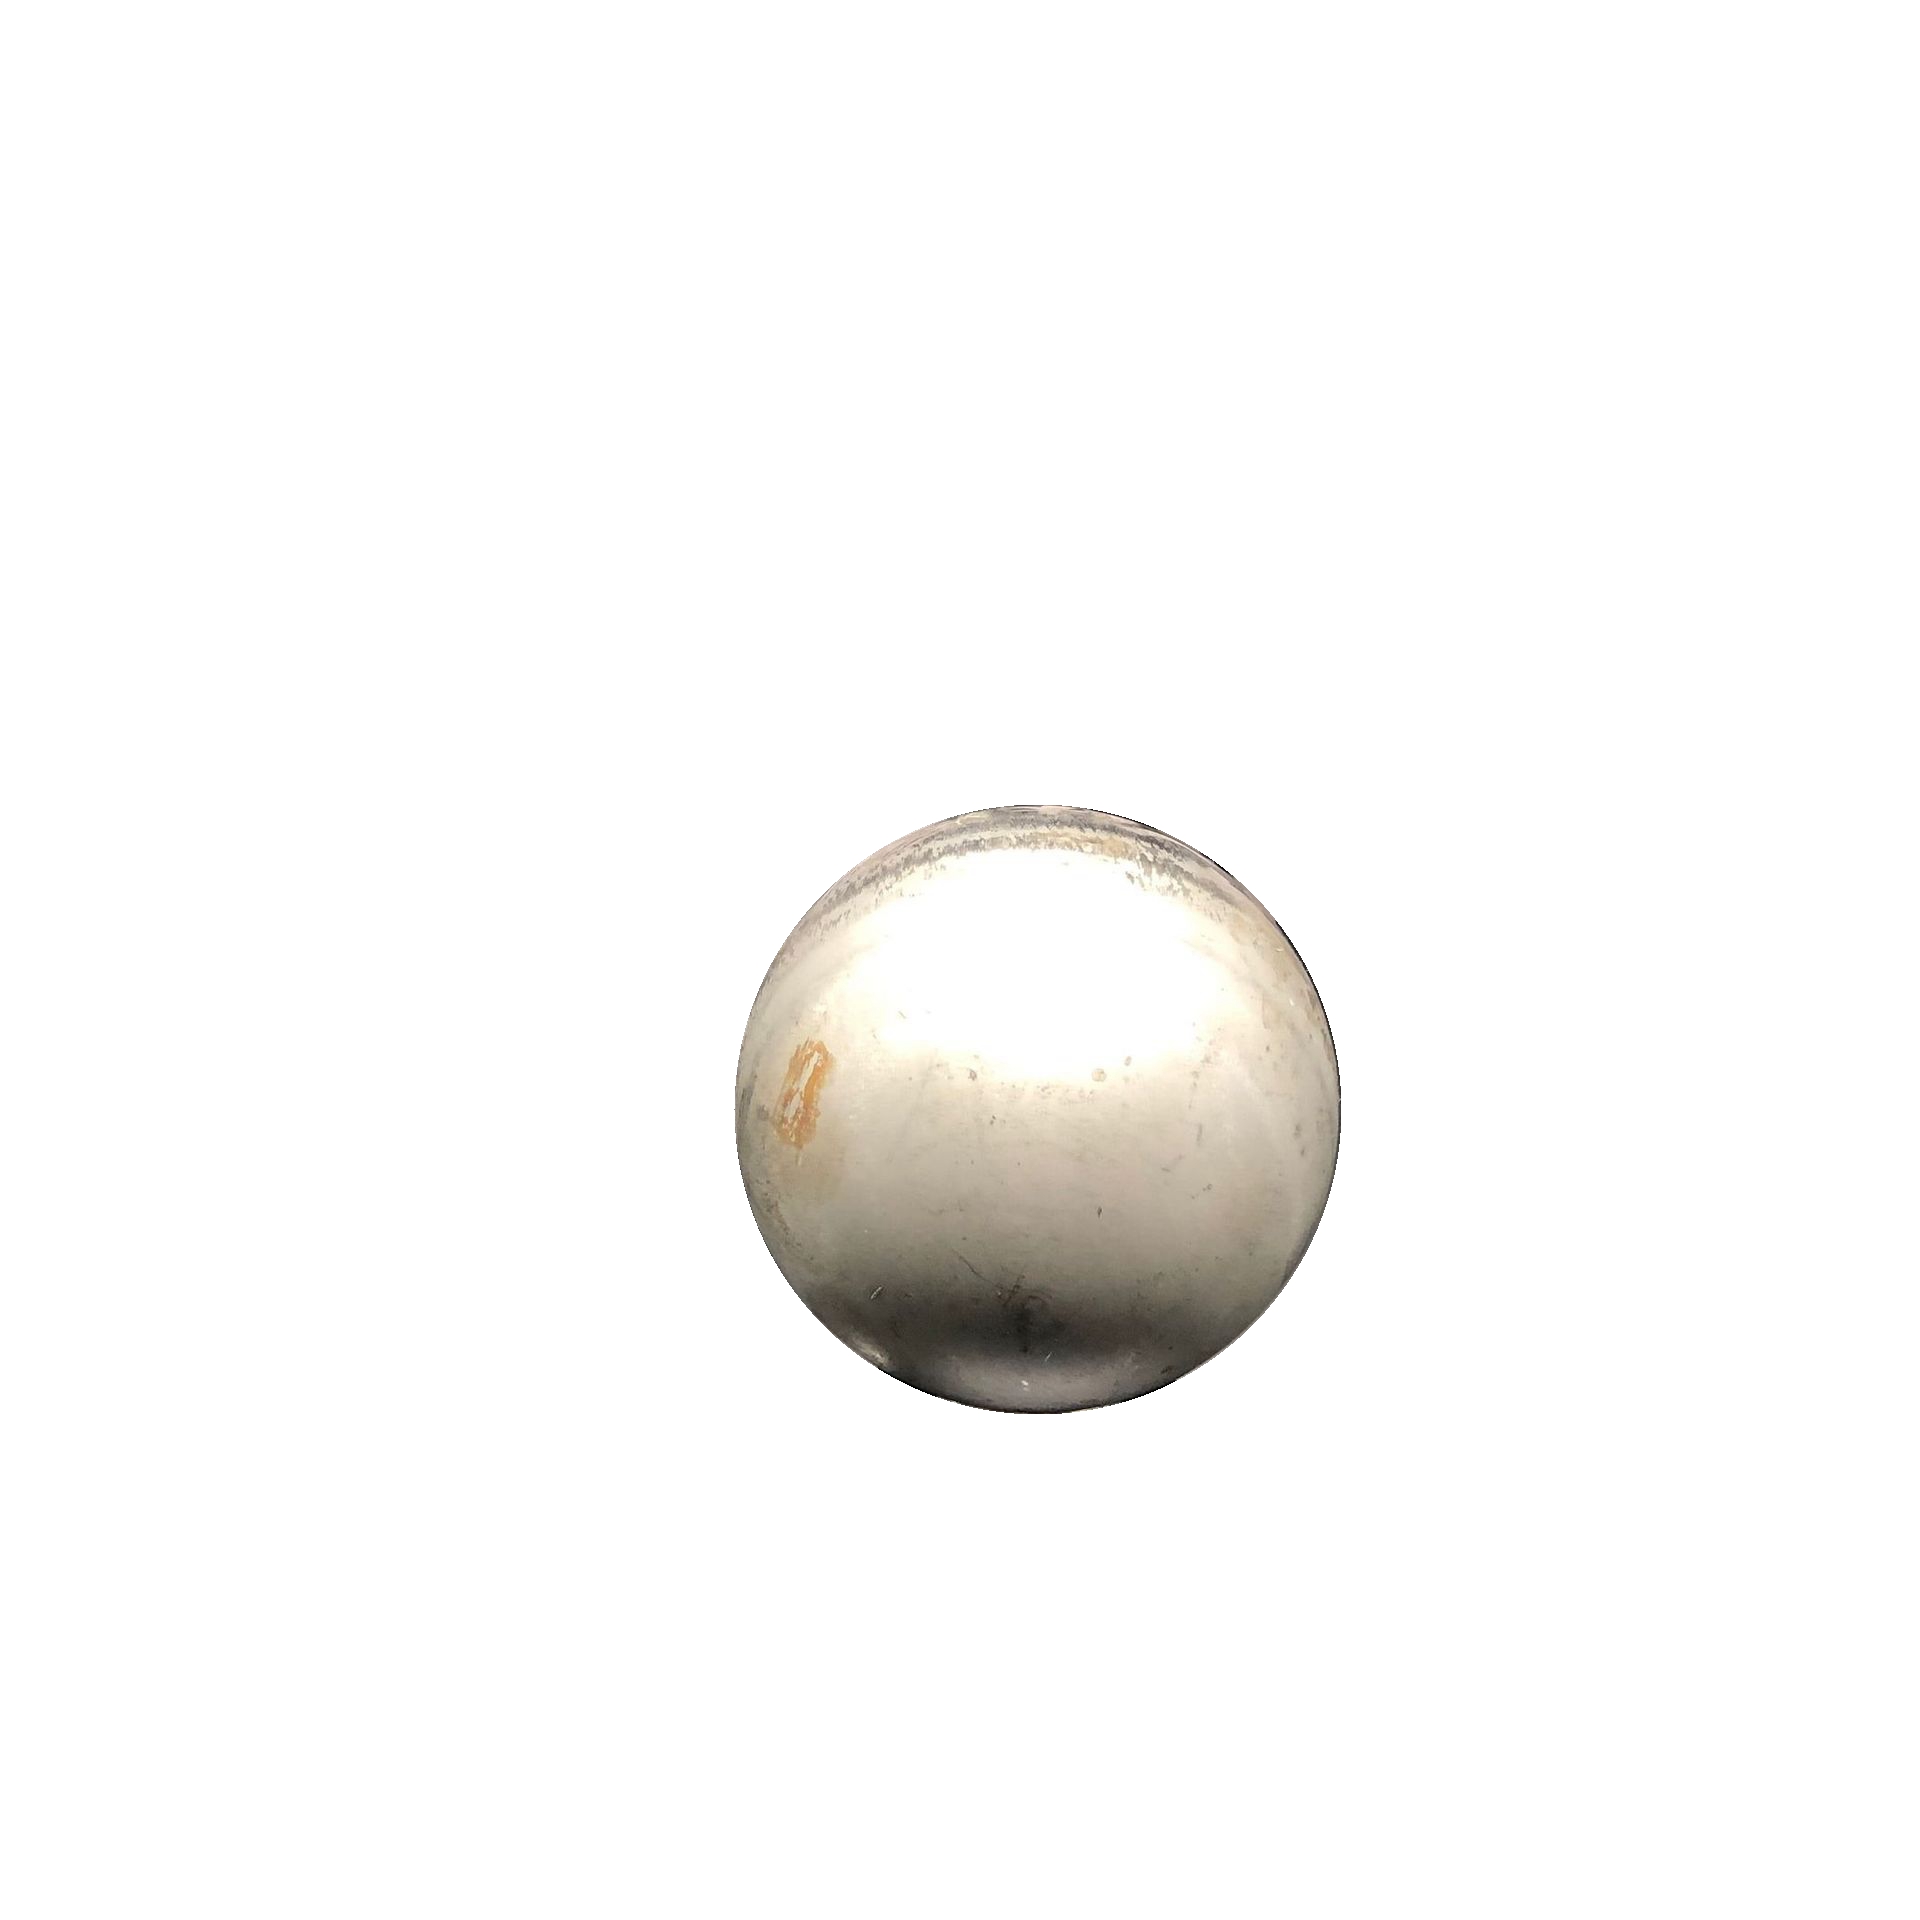 Decorative Handrail Stanchion Ball Round Metal Balls